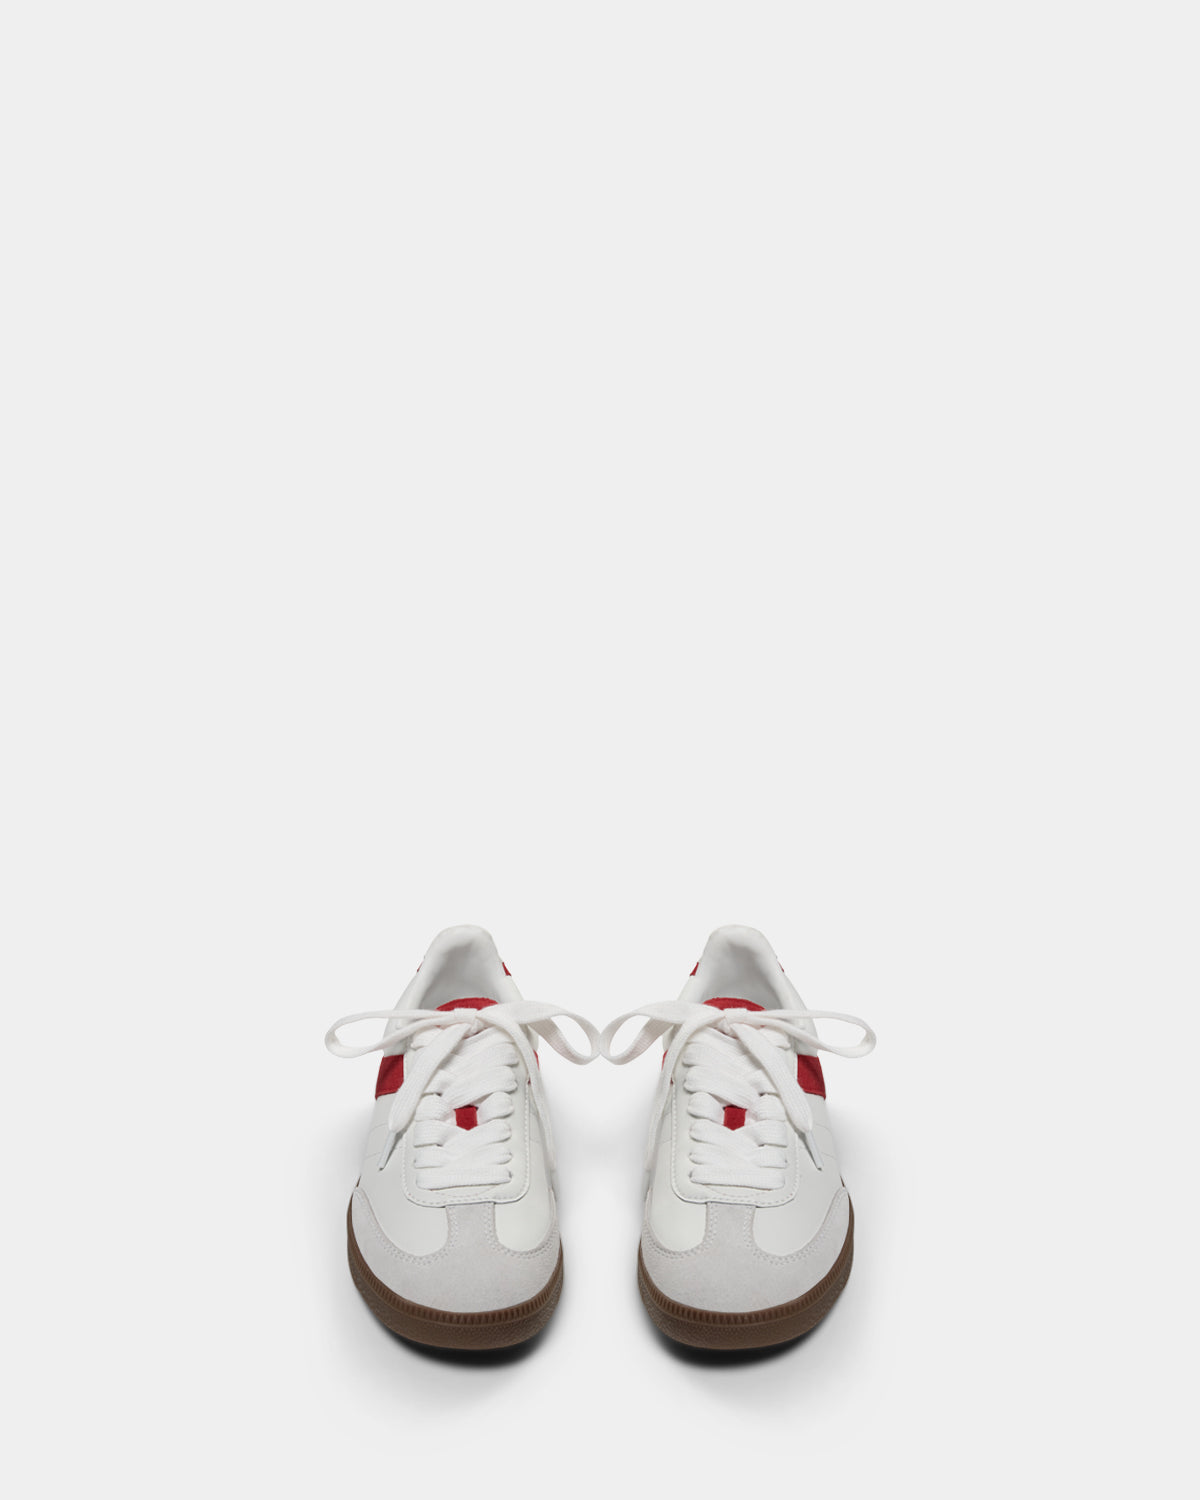 GNOS809-Sneaker-Red